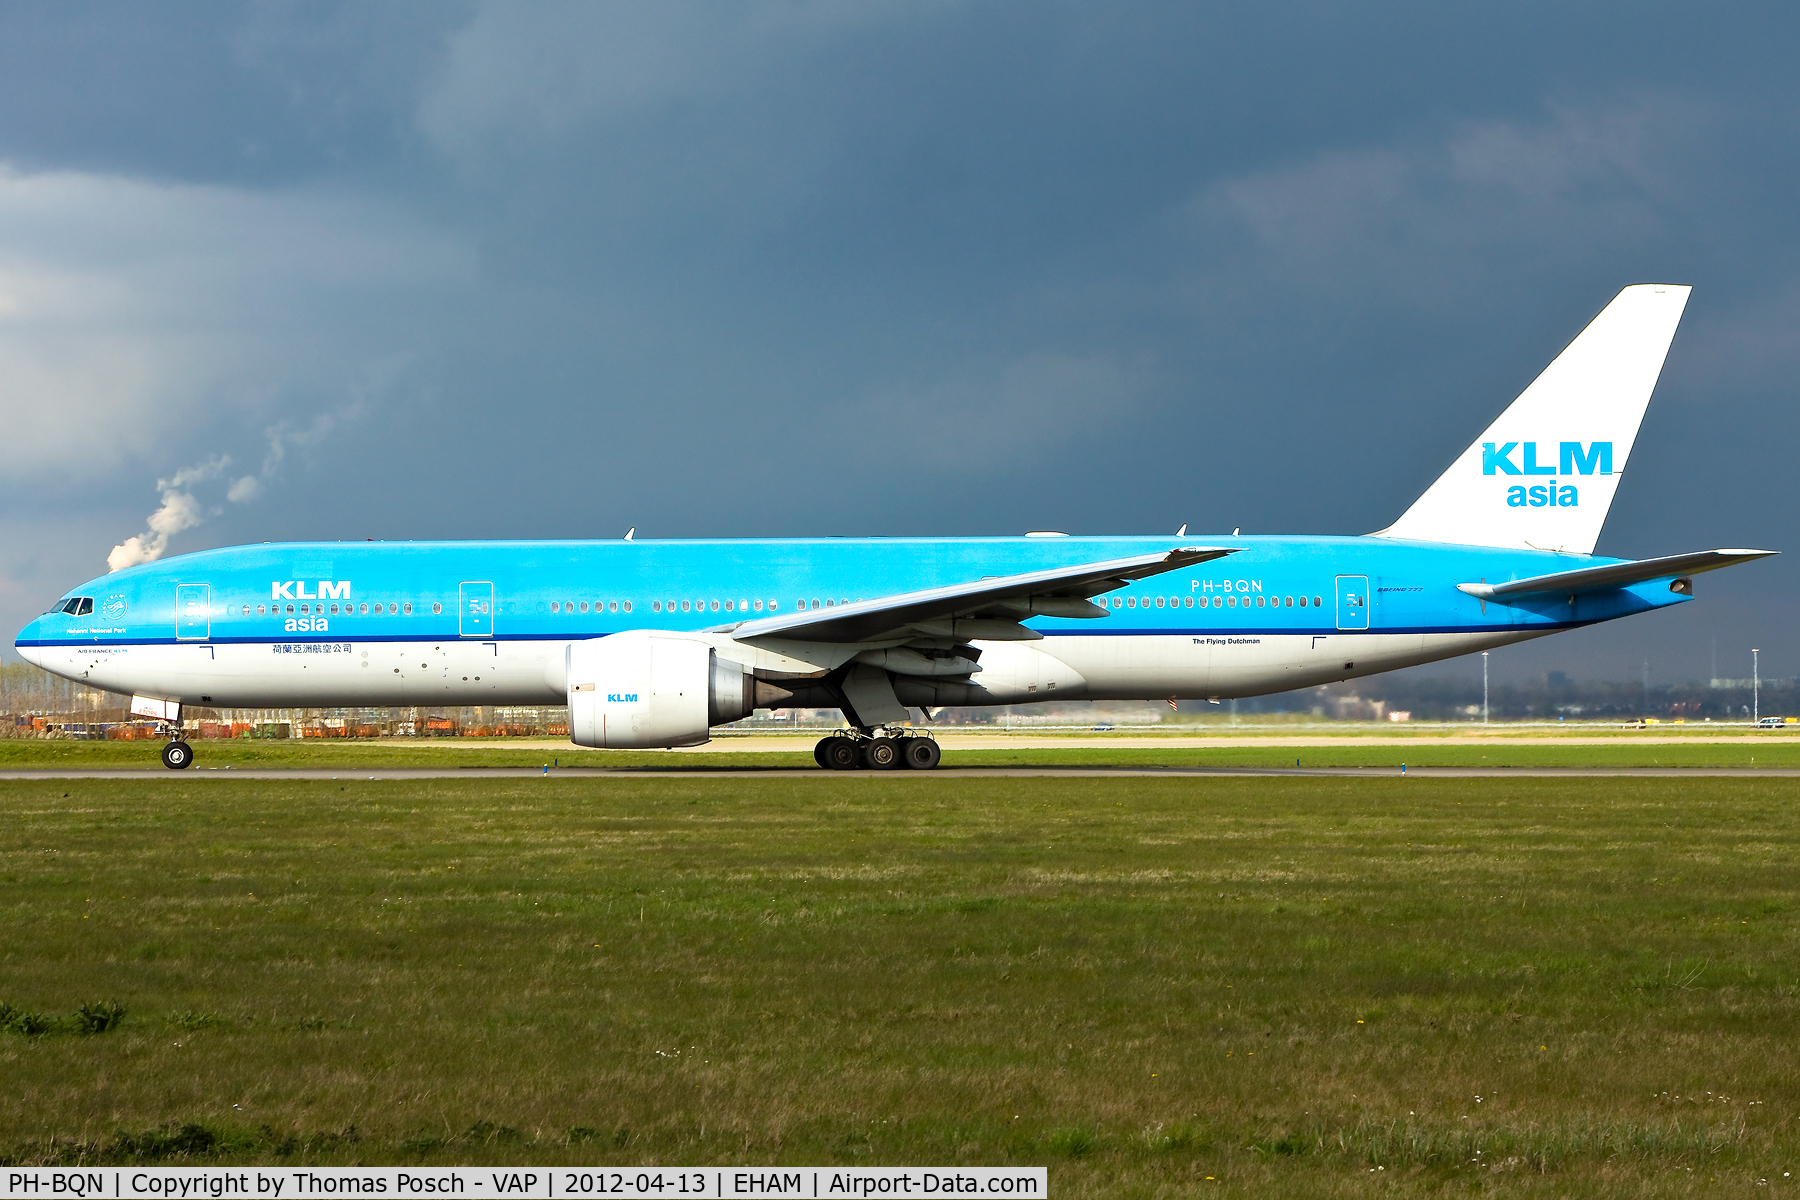 PH-BQN, 2006 Boeing 777-206/ER C/N 32720, KLM - Royal Dutch Airlines